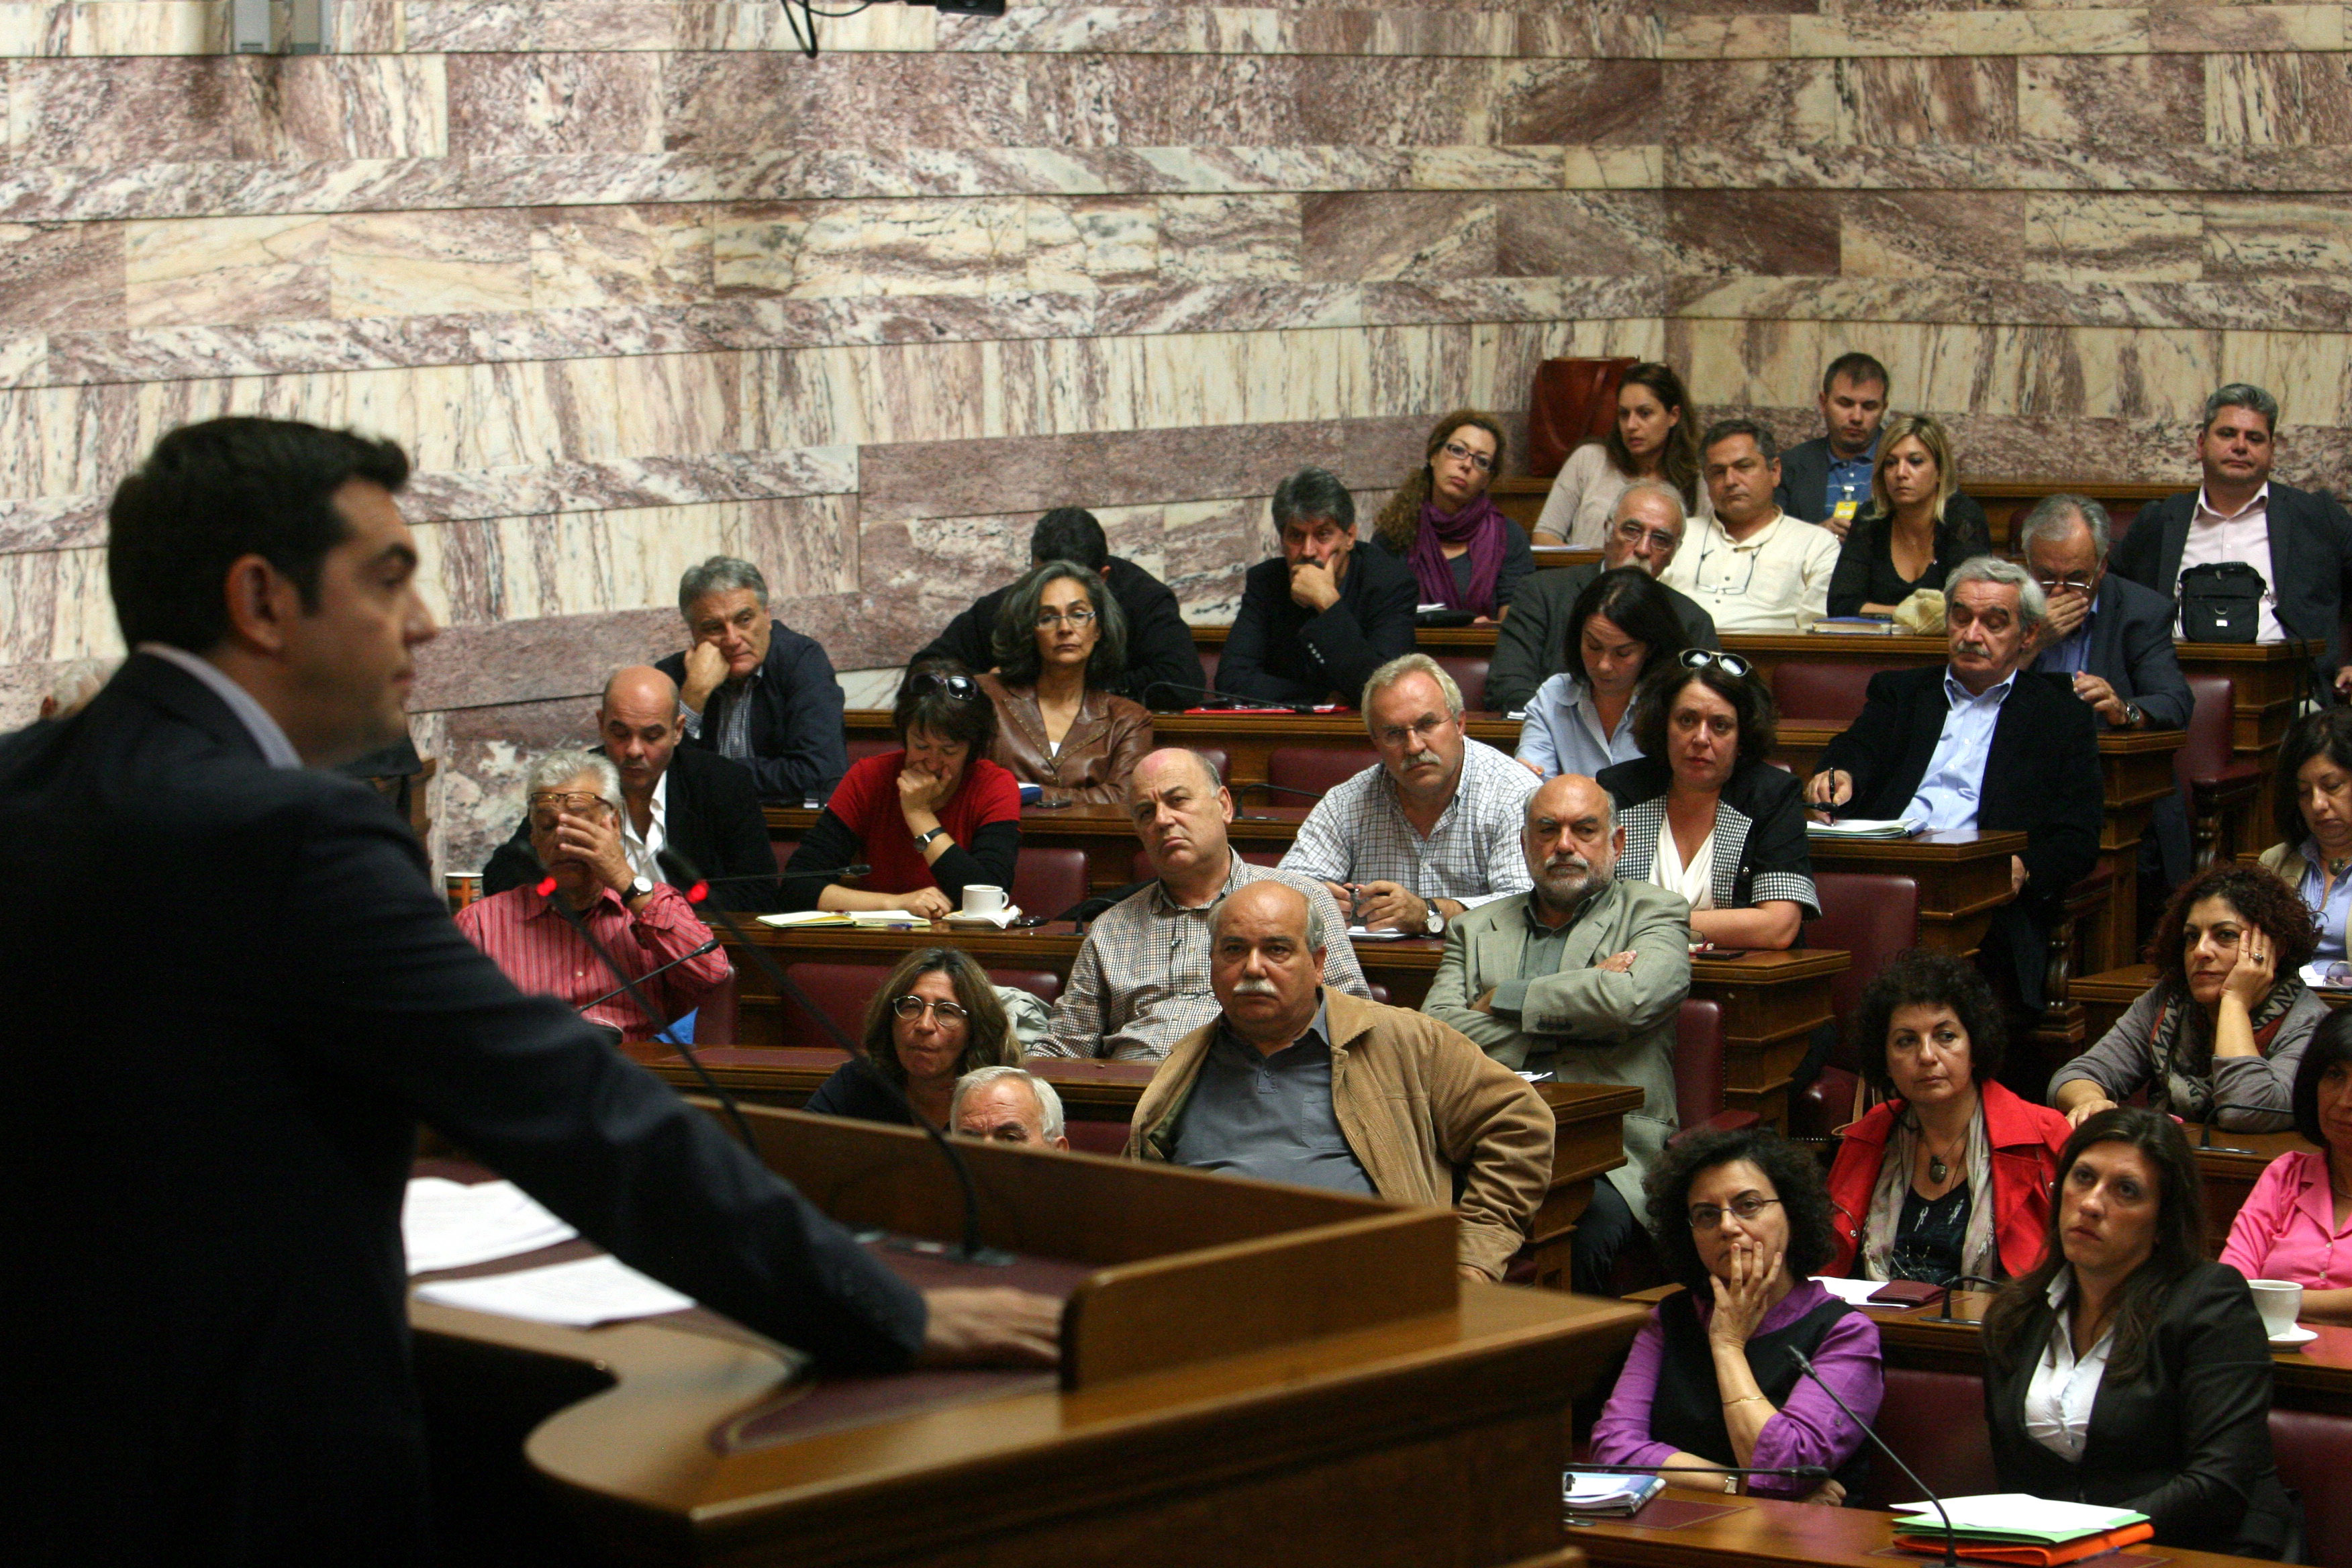 O ΣΥΡΙΖΑ για τη συνέντευξη Σαμαρά: “Δεν έπεισε πως δεν είναι ακροδεξιός πολιτικός”